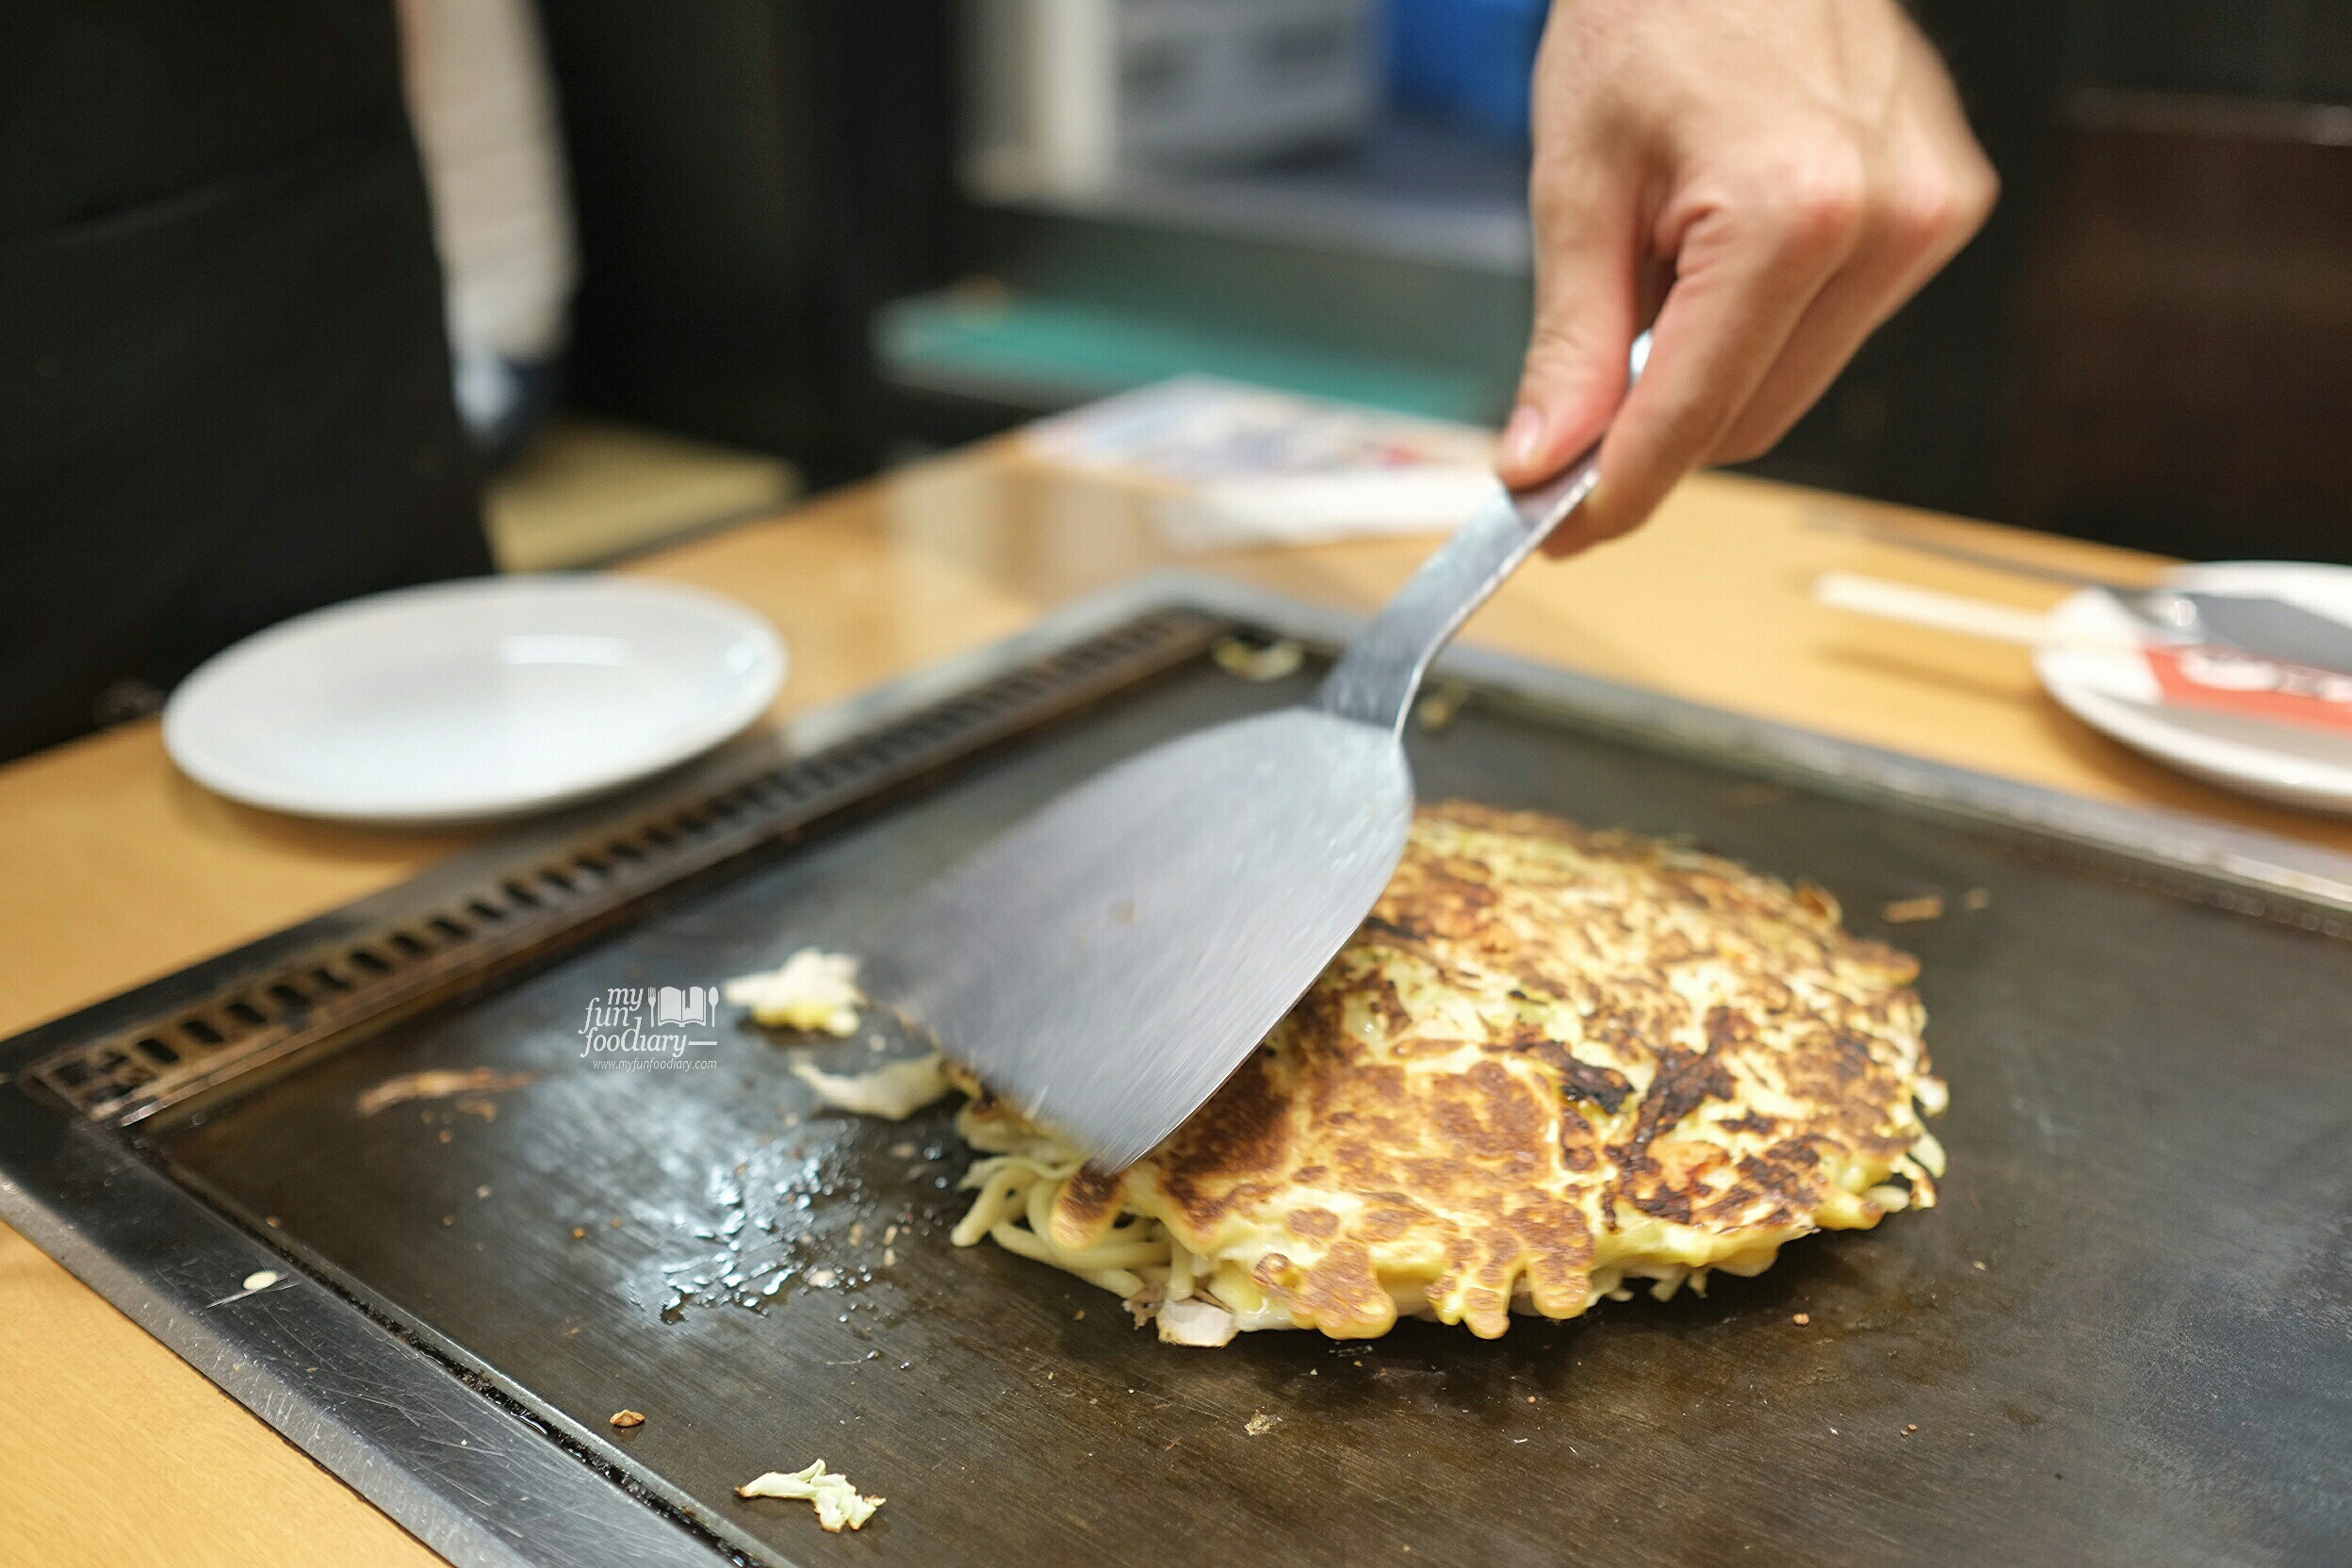 Third Step Turn Over Okonomiyaki at Tsuruhashi Fugetsu Dotonbori Osaka by Myfunfoodiary